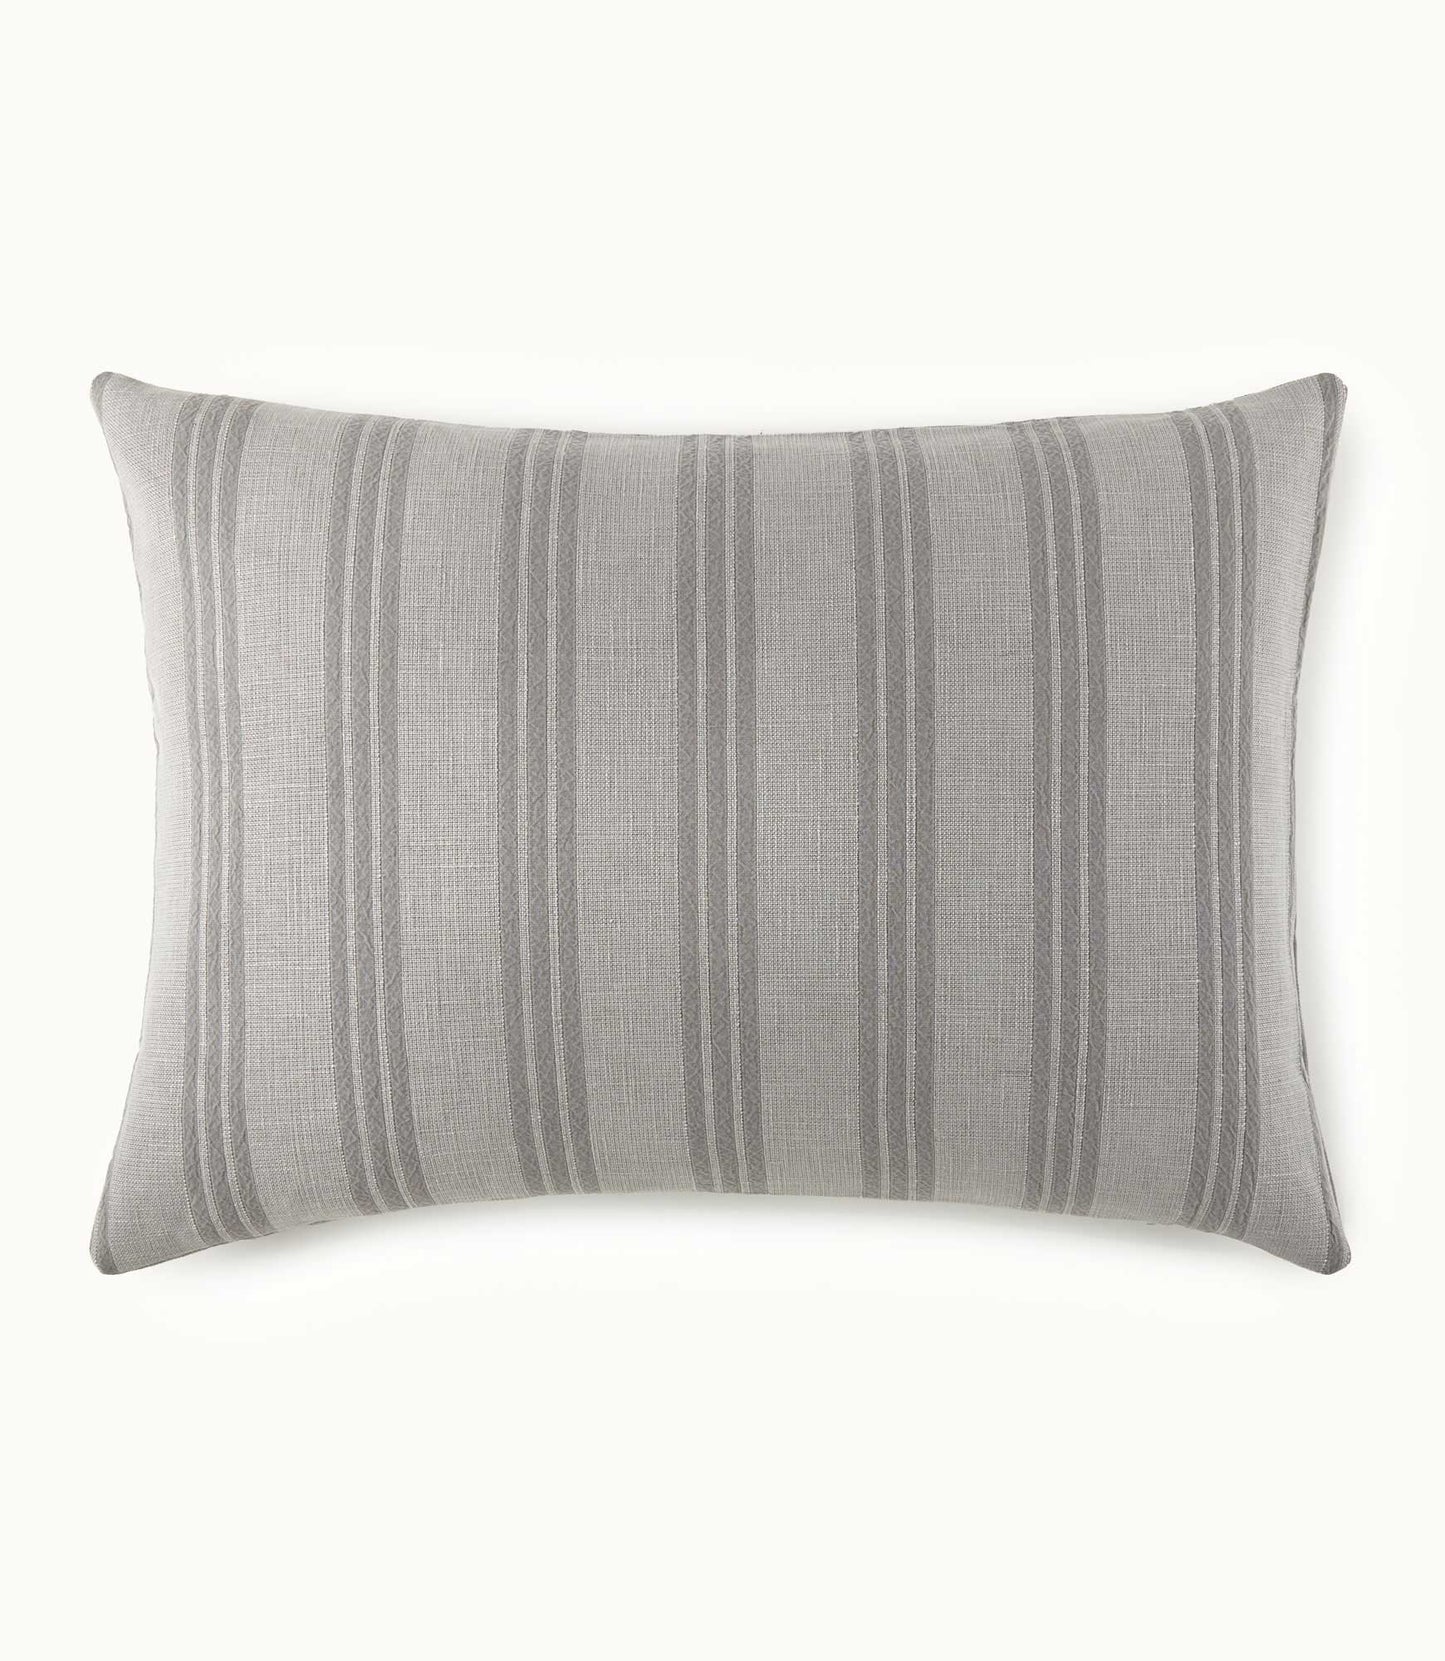 Lennox Striped Grand Euro Decorative Pillow, Gray